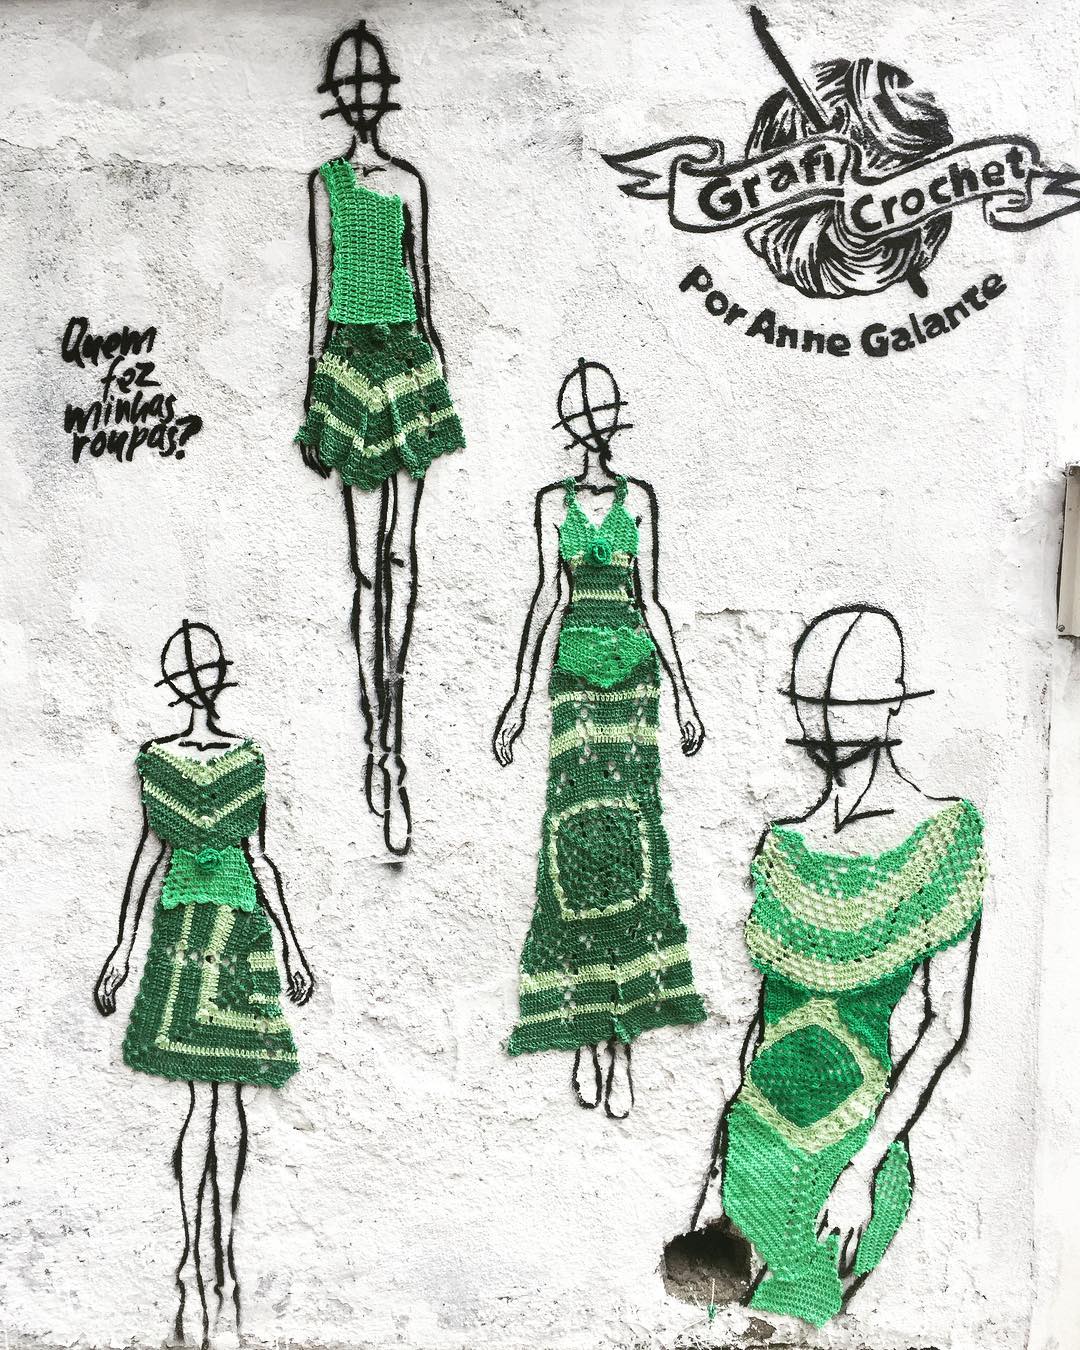 It's a Fashion Revolution! Anne Galante's Crochet Street Art For 'Fashion Revolution Day'